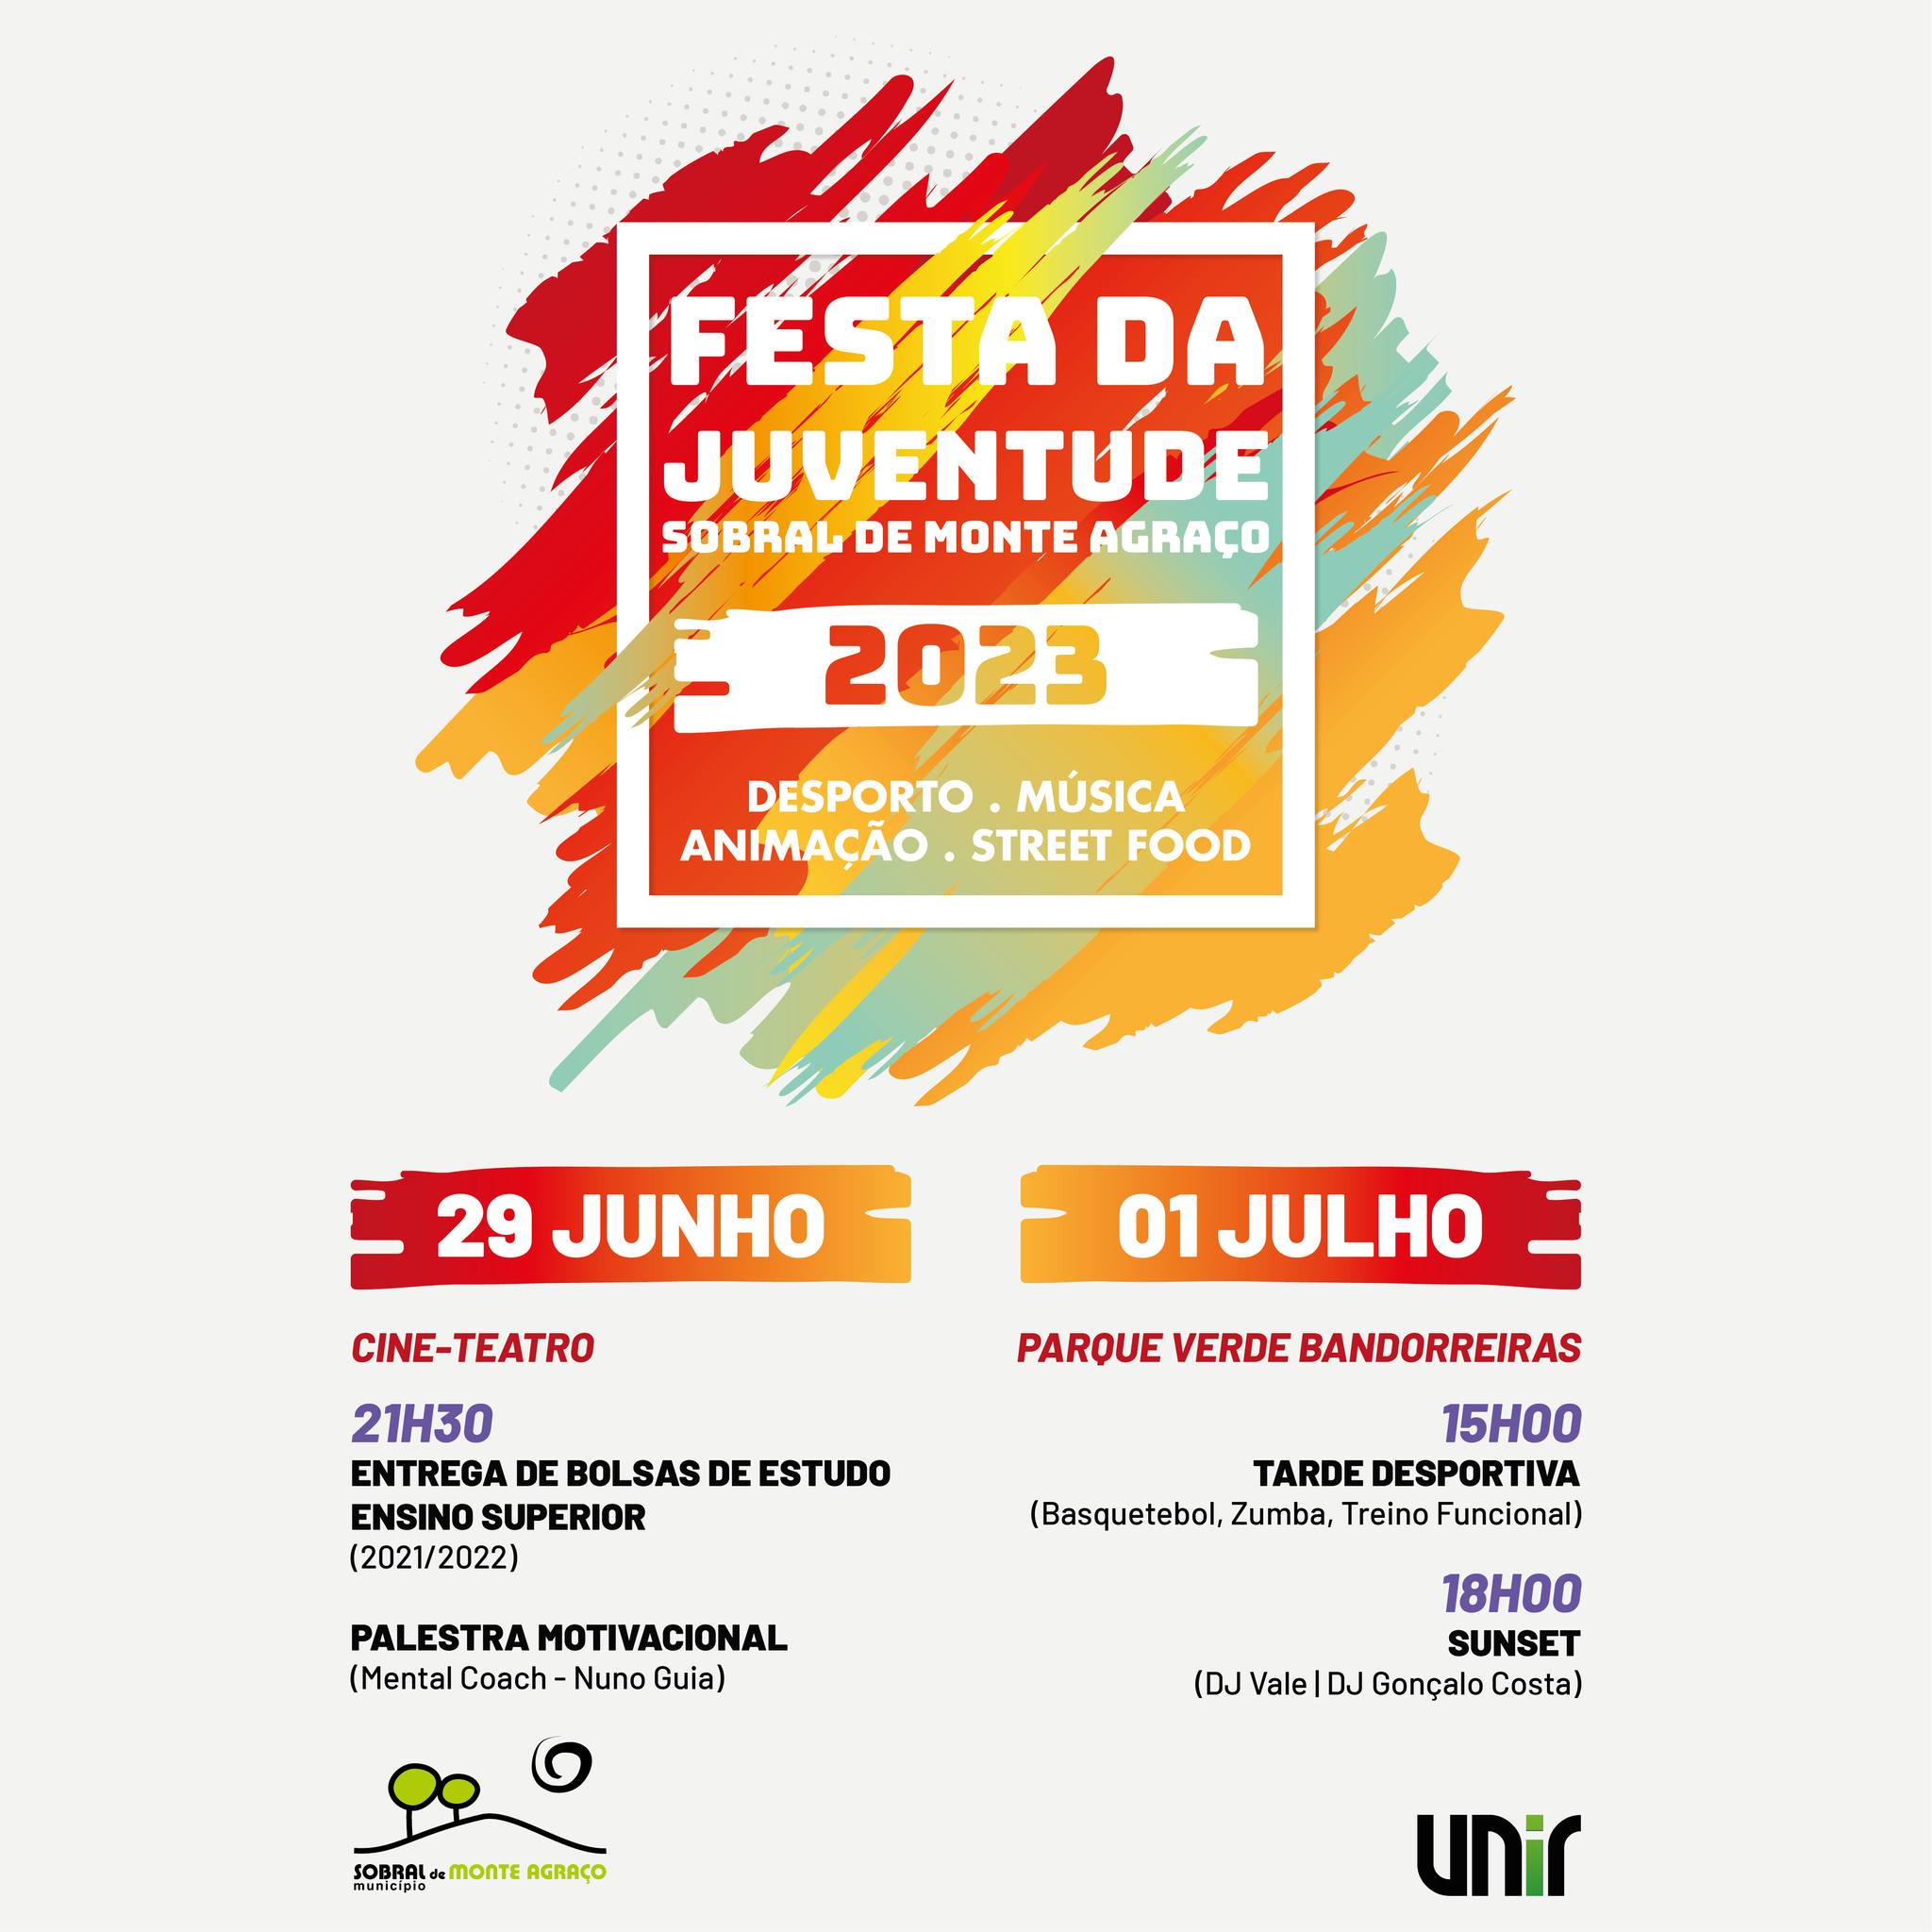 Festa da Juventude 2023 - Sobral de Monte Agraço